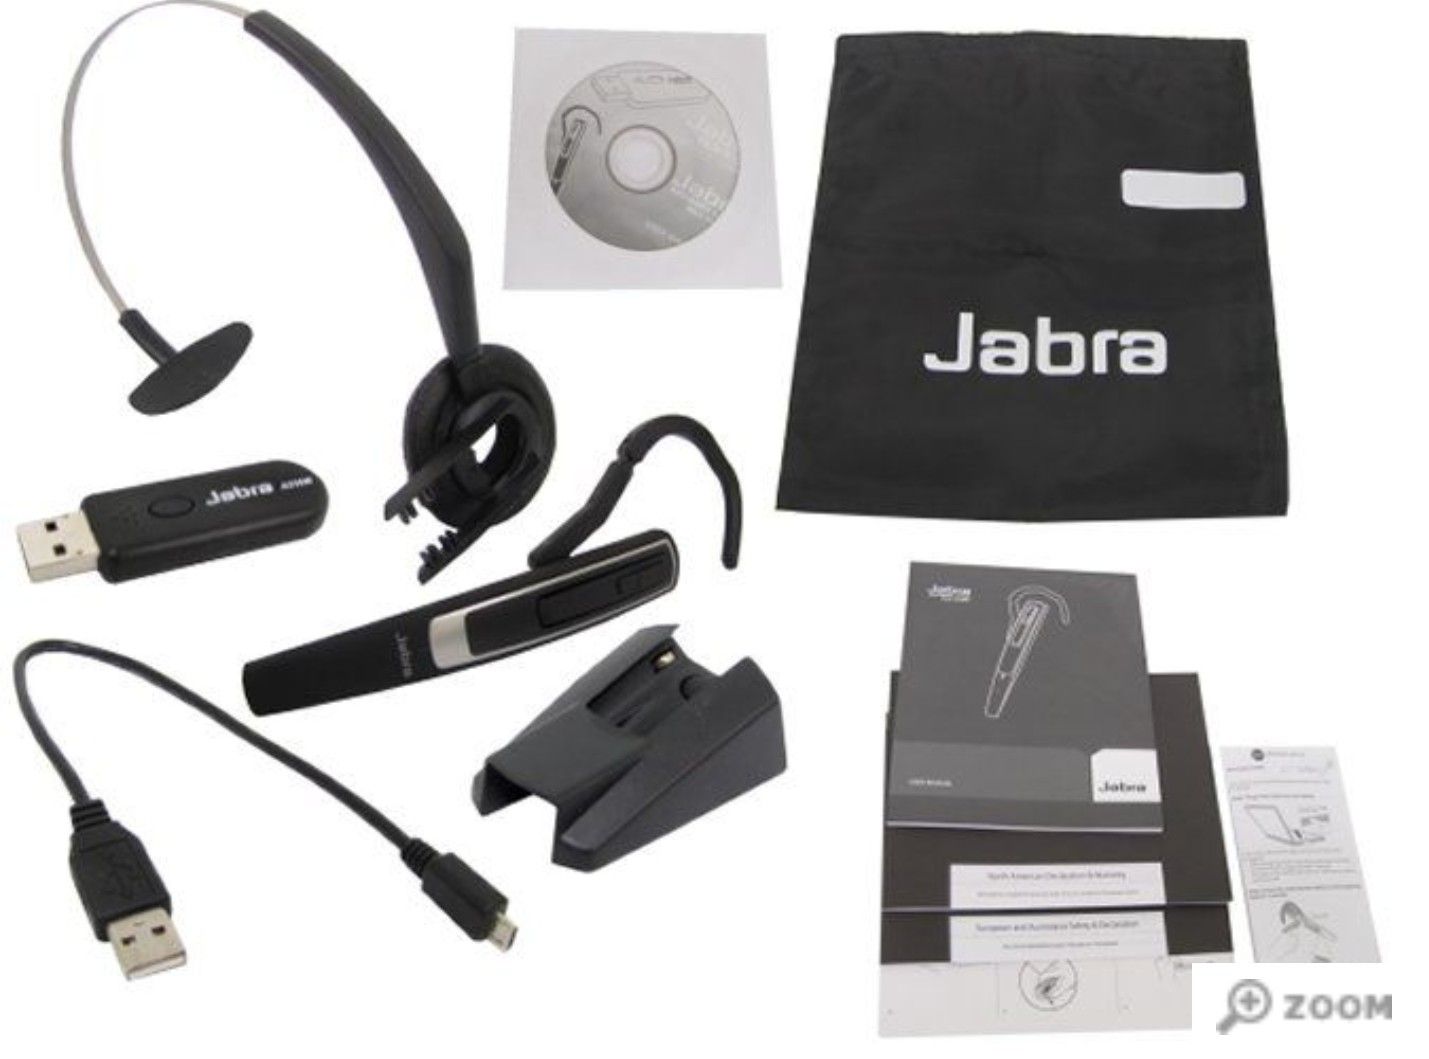 Jabra M5390 Multiuse Bluetooth Wireless Headset and A335w USB Dongle